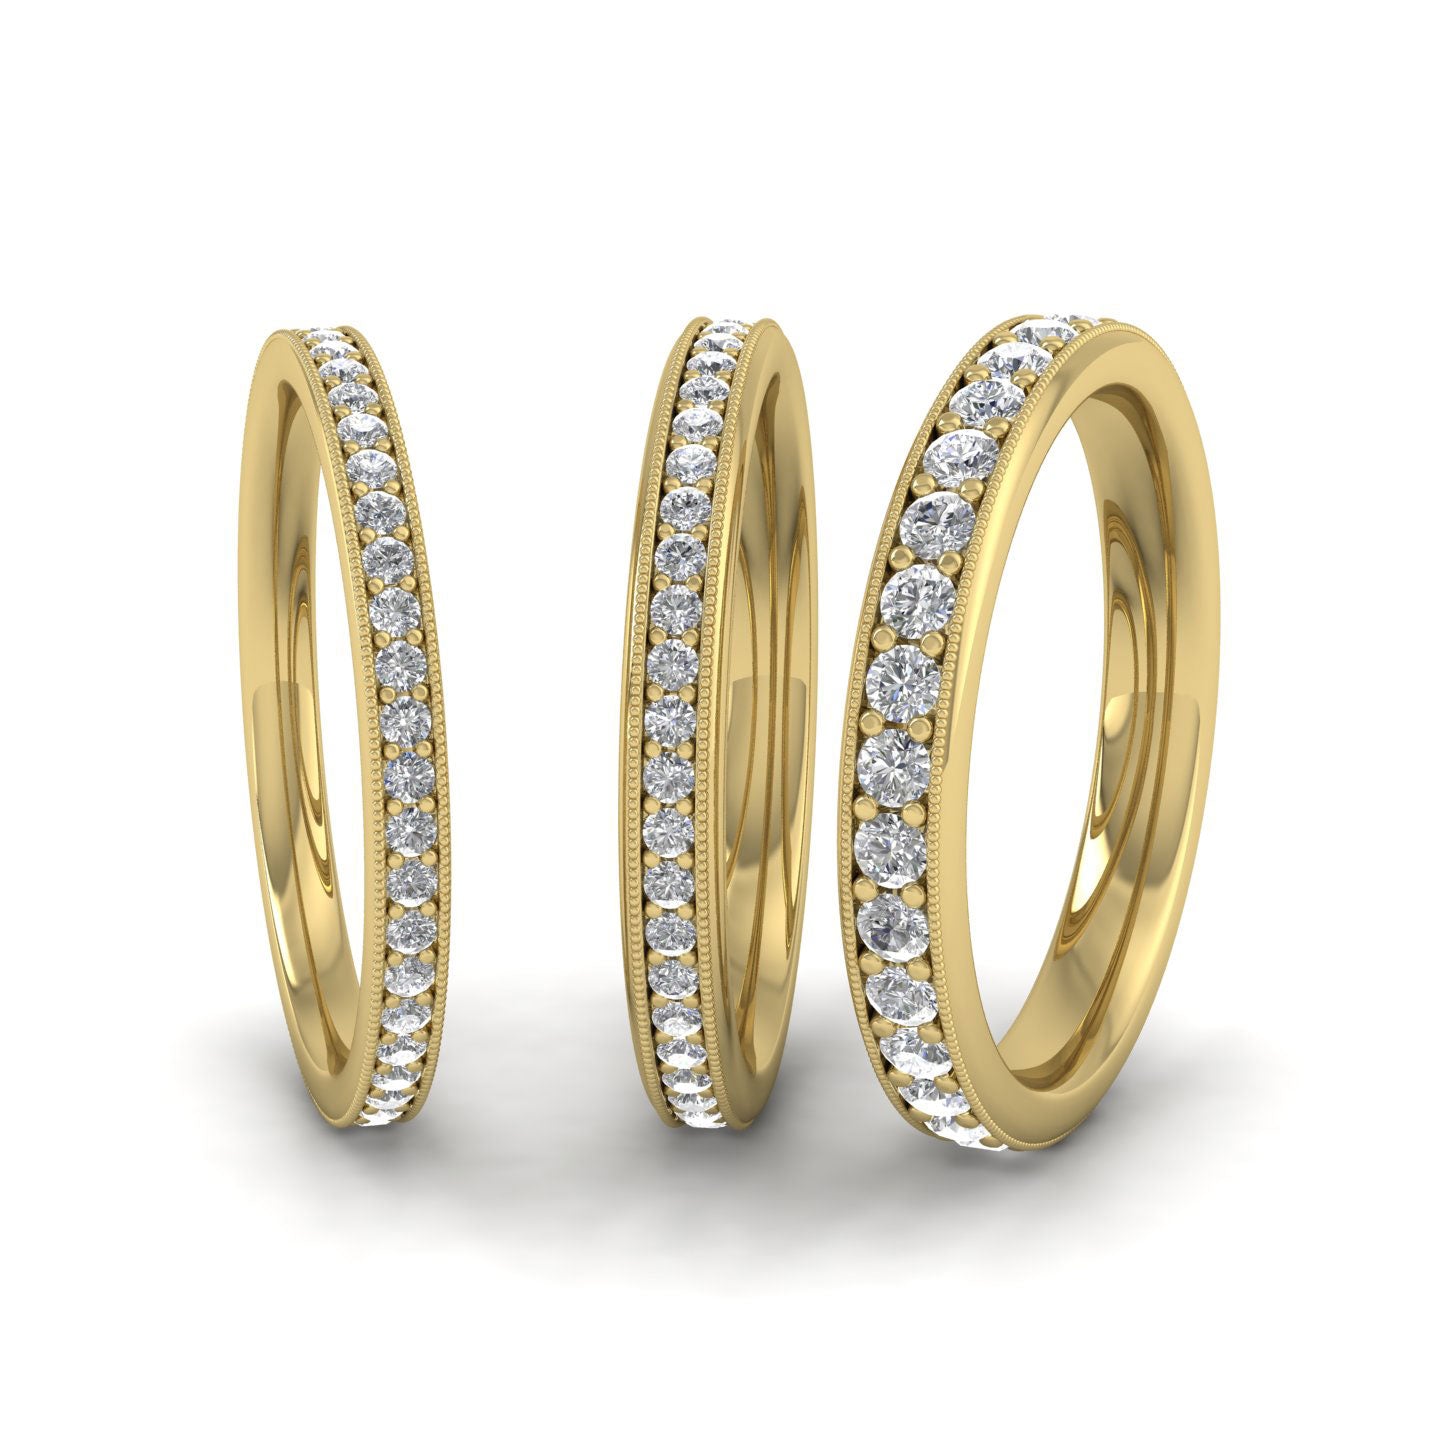 Full Bead Set 0.46ct Round Brilliant Cut Diamond With Millgrain Surround 9ct Yellow Gold 2mm Wedding Ring